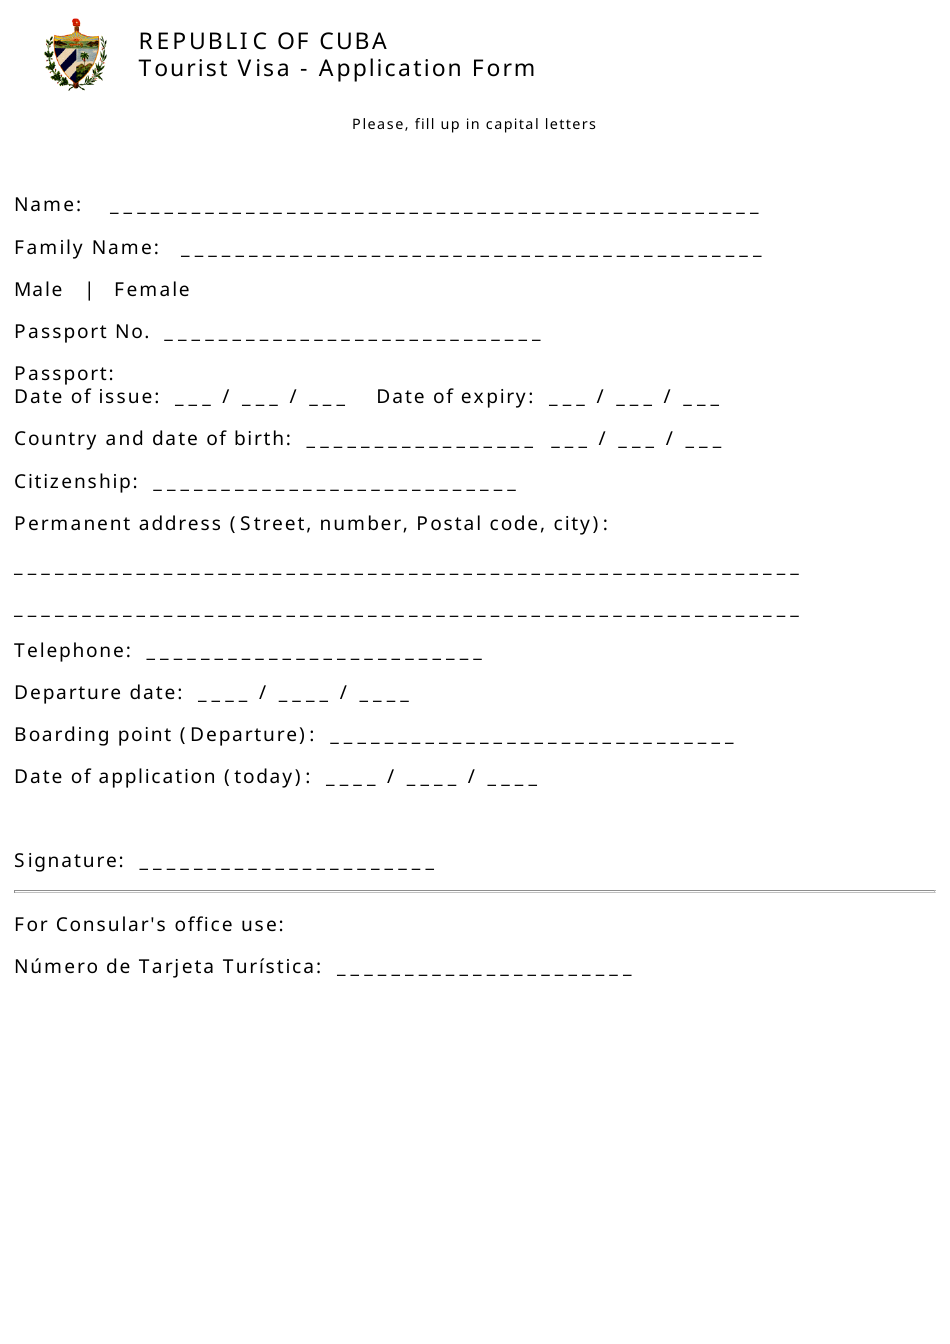 Republic of Cuba Tourist Visa Application Form - Cuba, Page 1